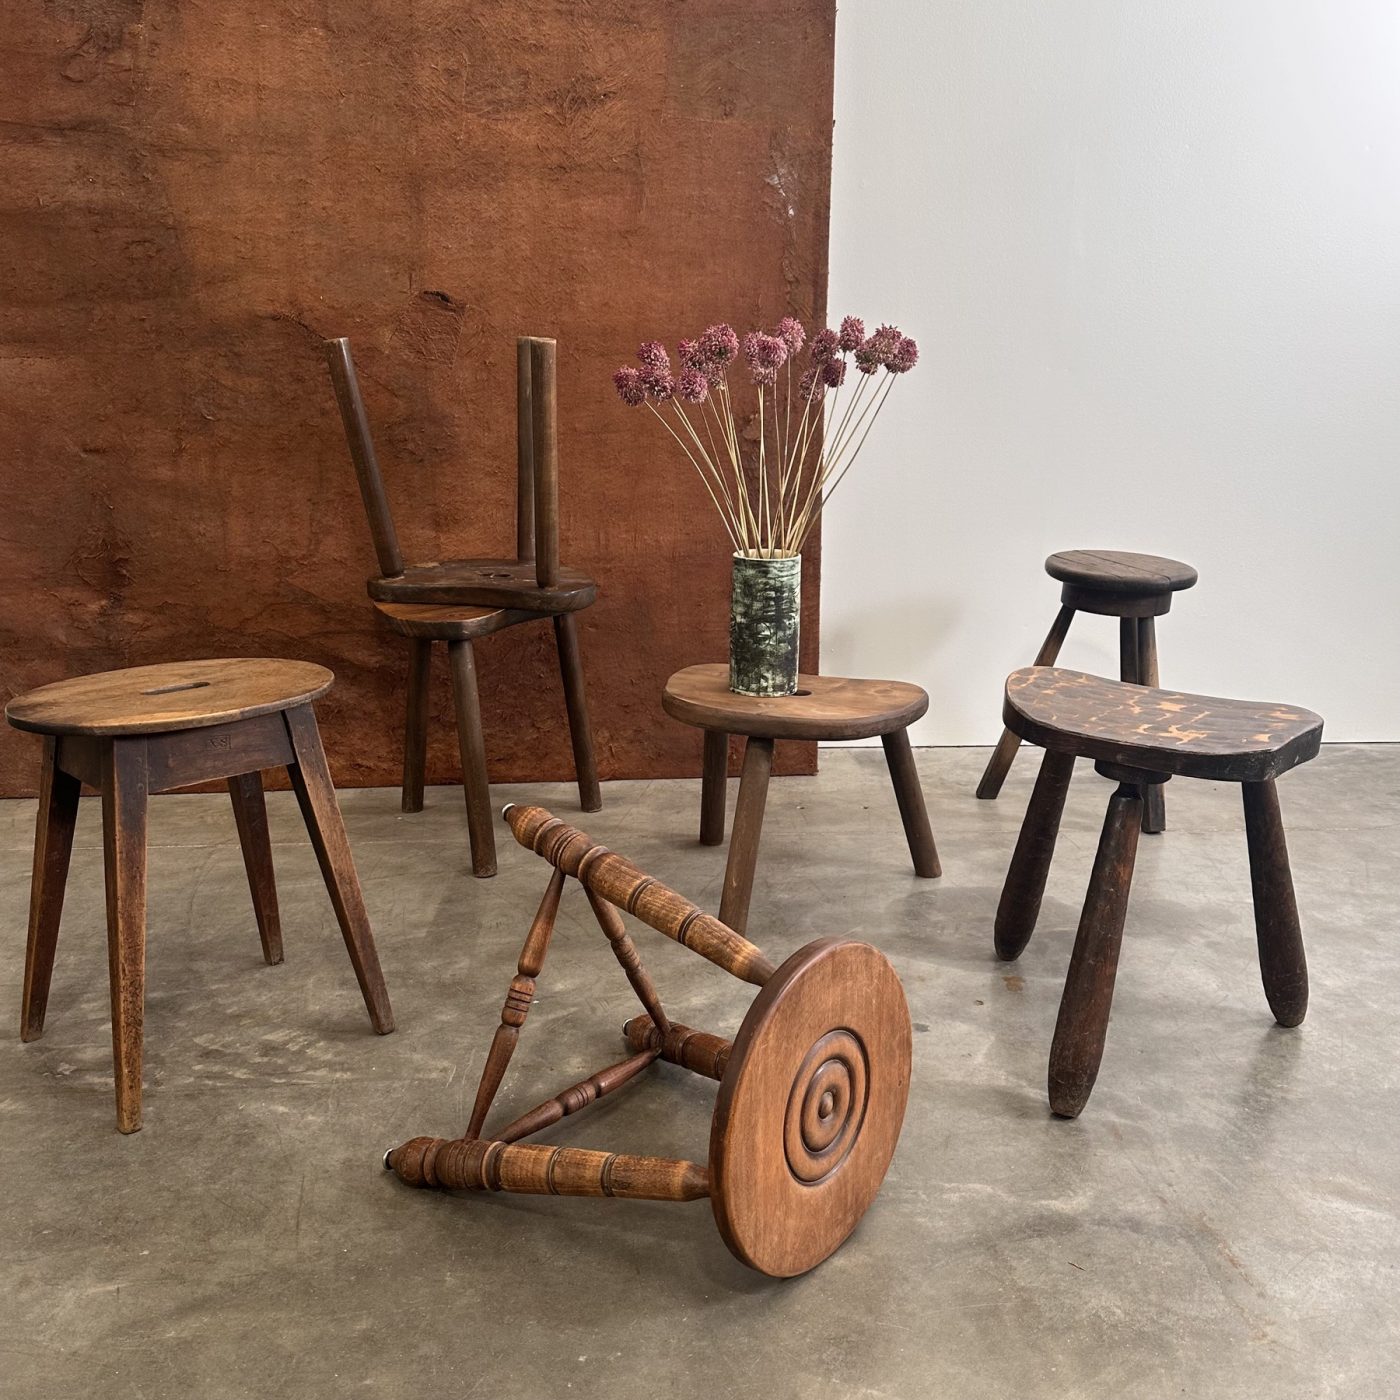 objet-vagabond-stool-collection0008